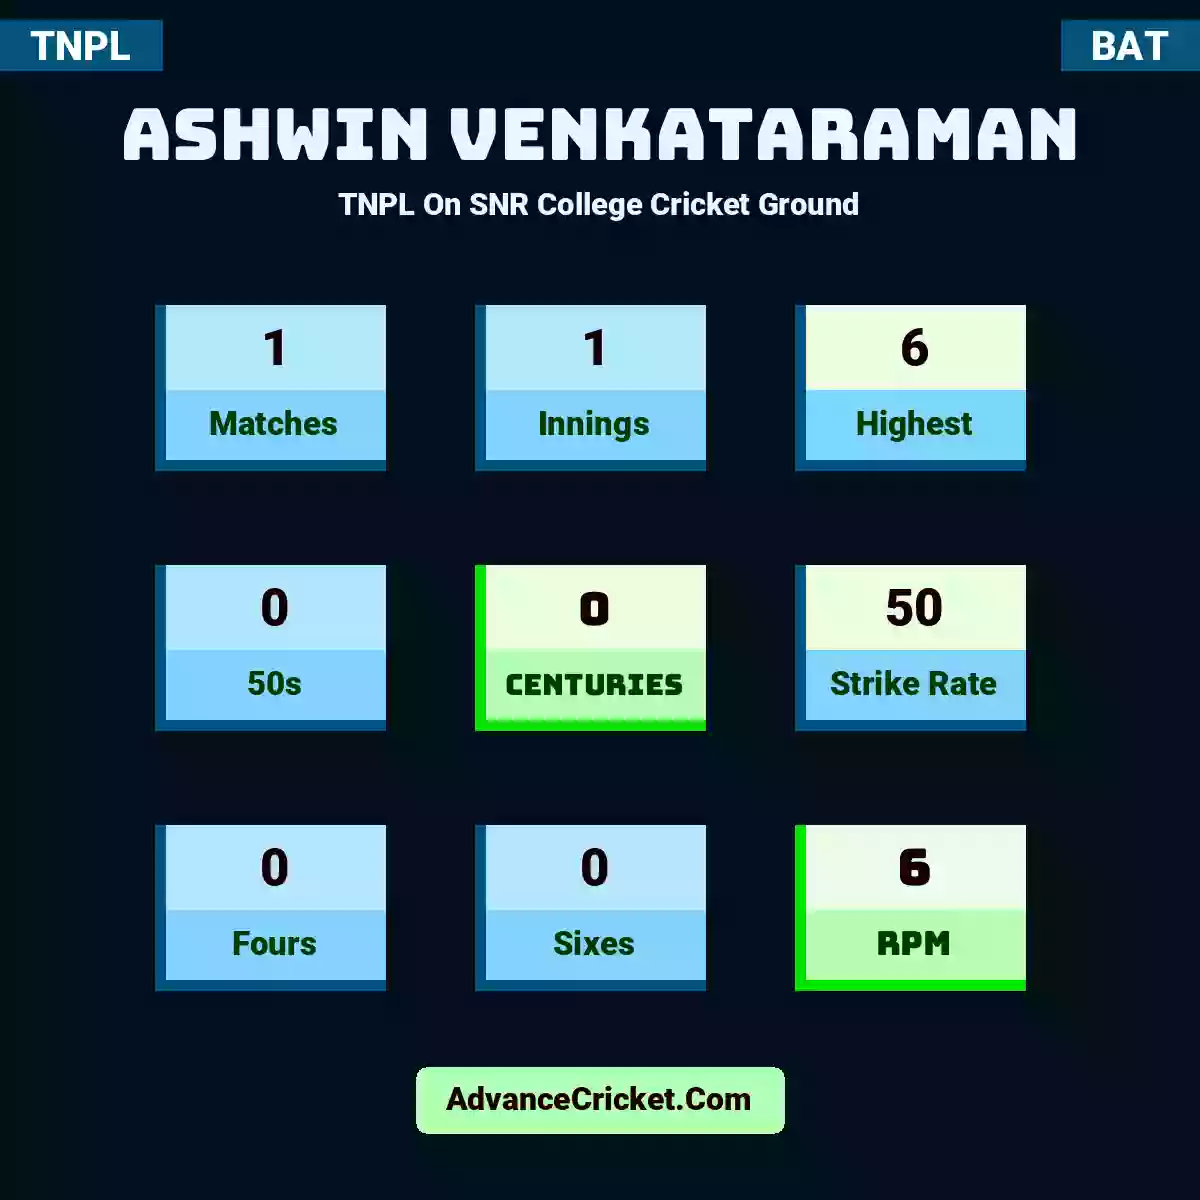 Ashwin Venkataraman TNPL  On SNR College Cricket Ground, Ashwin Venkataraman played 1 matches, scored 6 runs as highest, 0 half-centuries, and 0 centuries, with a strike rate of 50. A.Venkataraman hit 0 fours and 0 sixes, with an RPM of 6.